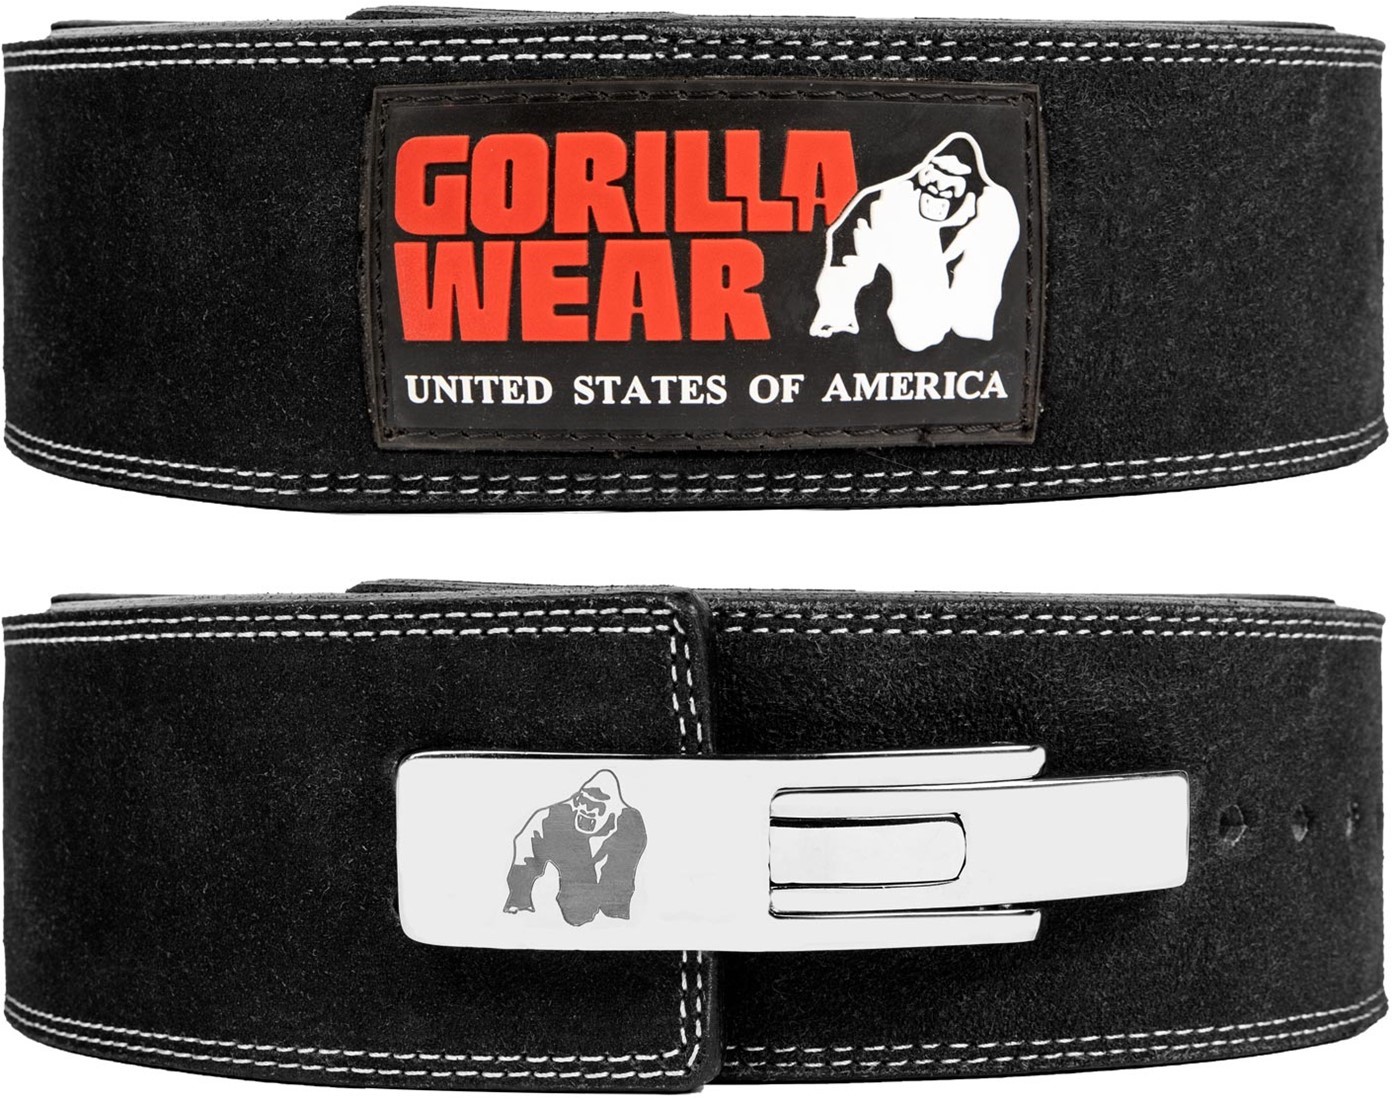 Gorilla Wear 4 Inch Leren Lever Lifting Belt - Zwart